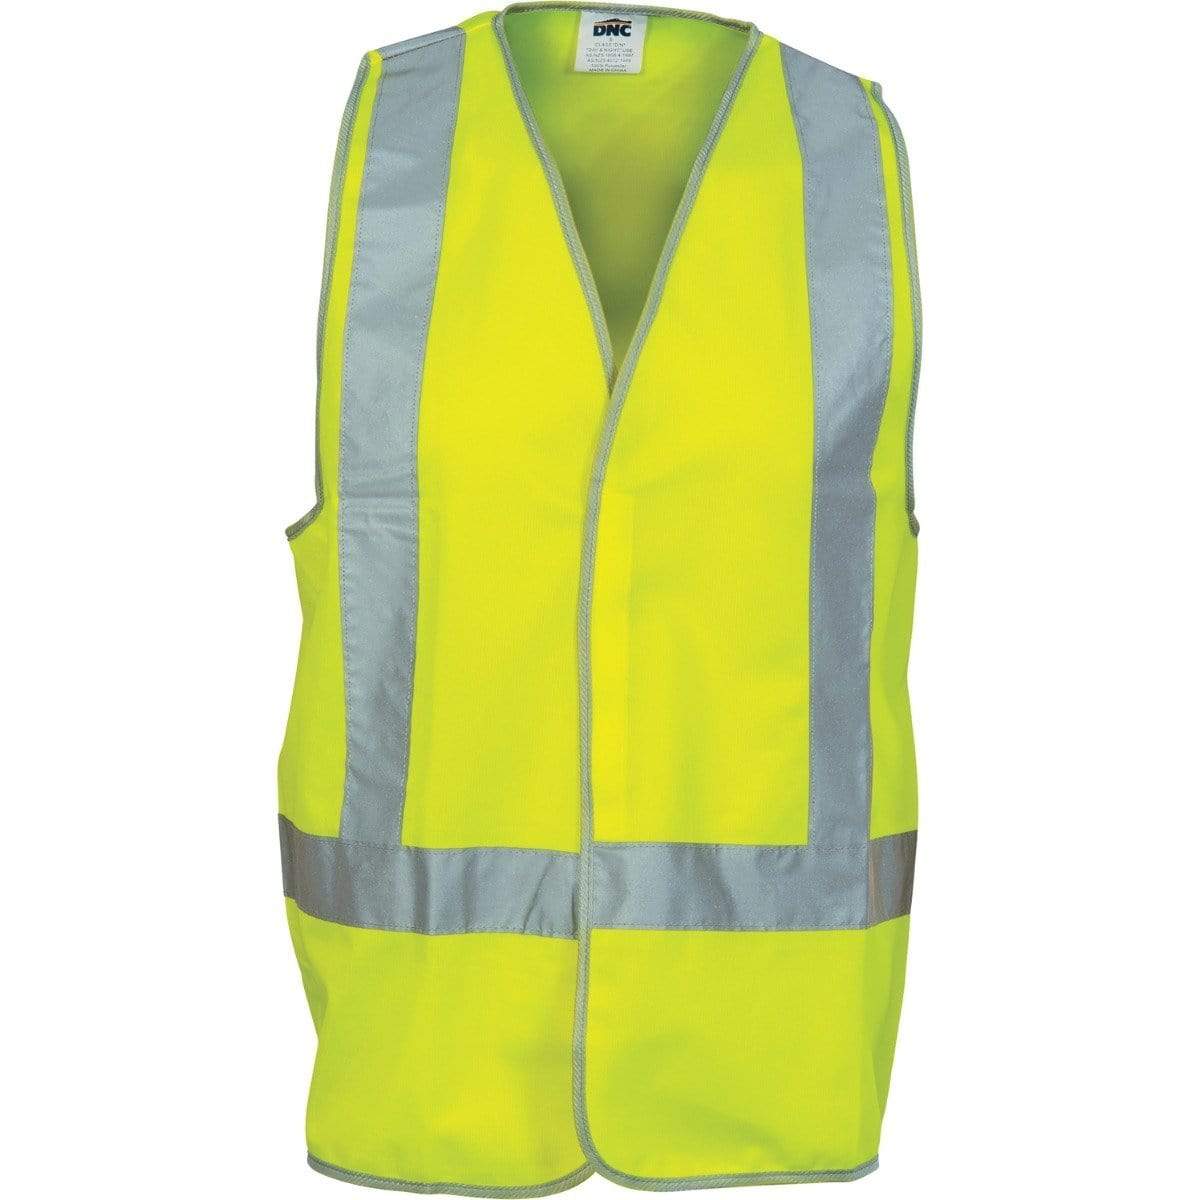 Dnc Workwear Day/night Safety Vest With H-pattern - 3804 Work Wear DNC Workwear Yellow XS 